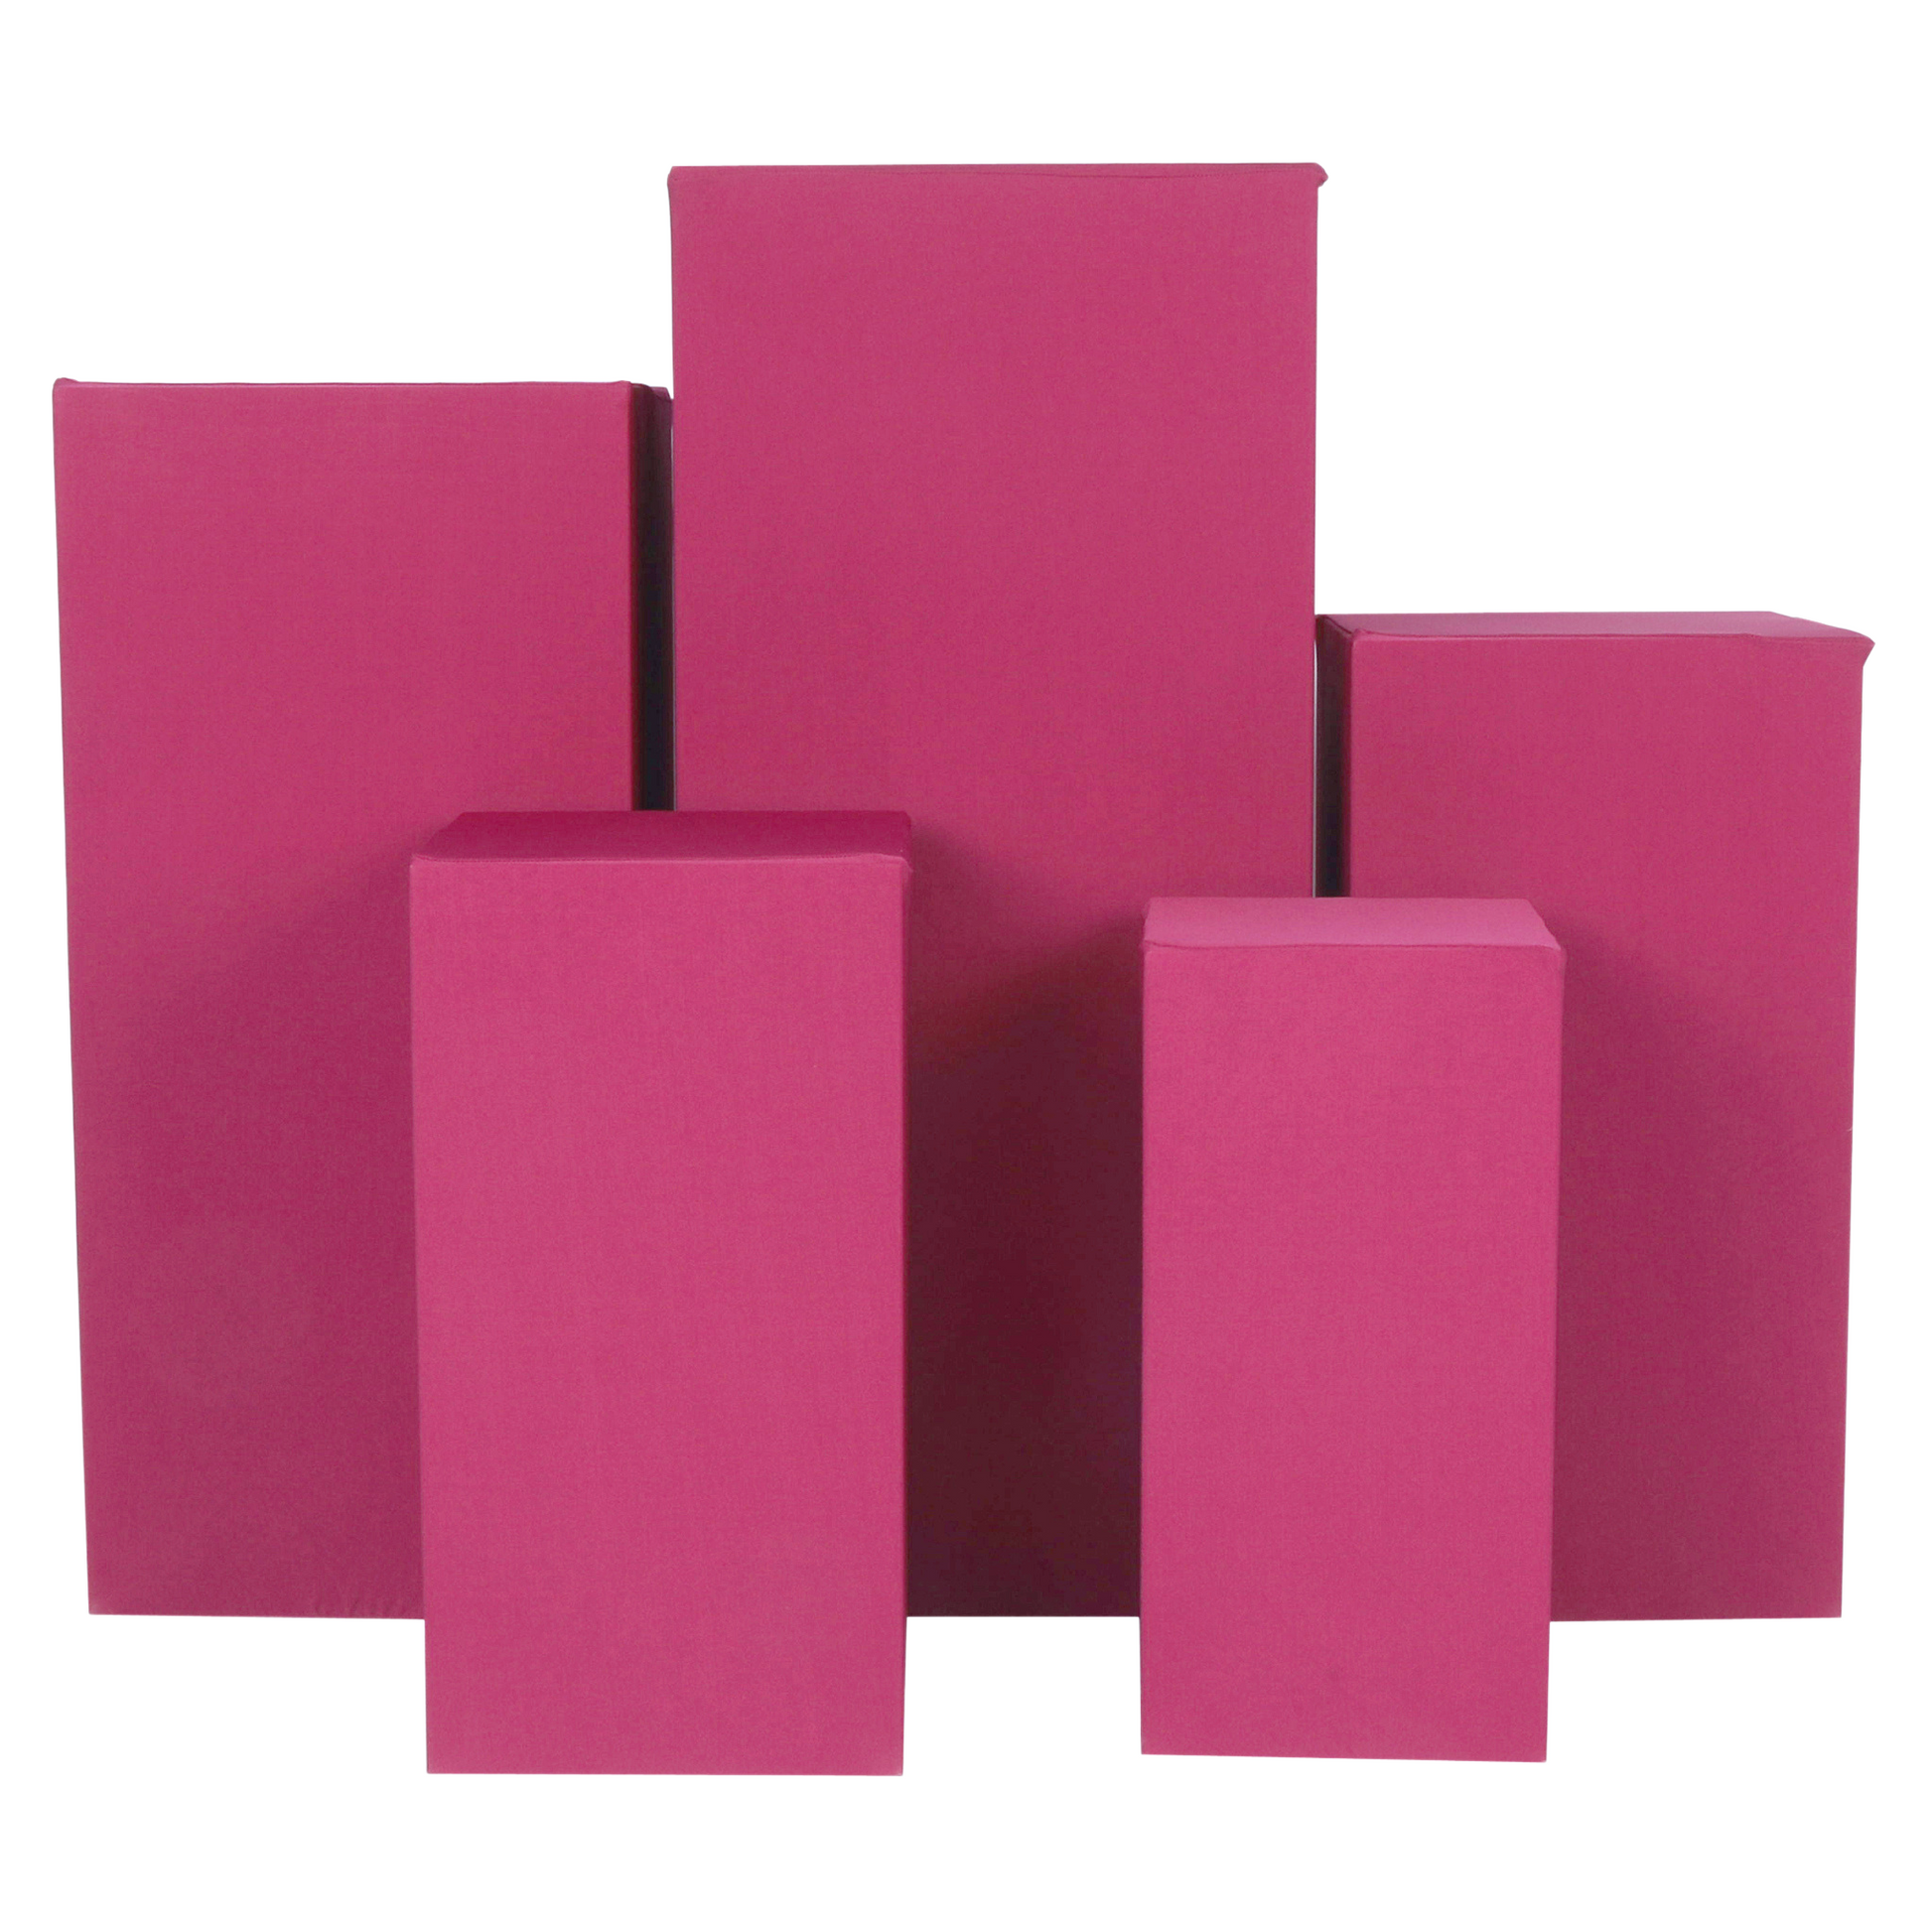 Spandex Covers for Square Metal Pillar Pedestal Stands 5 pcs/set - Fuchsia